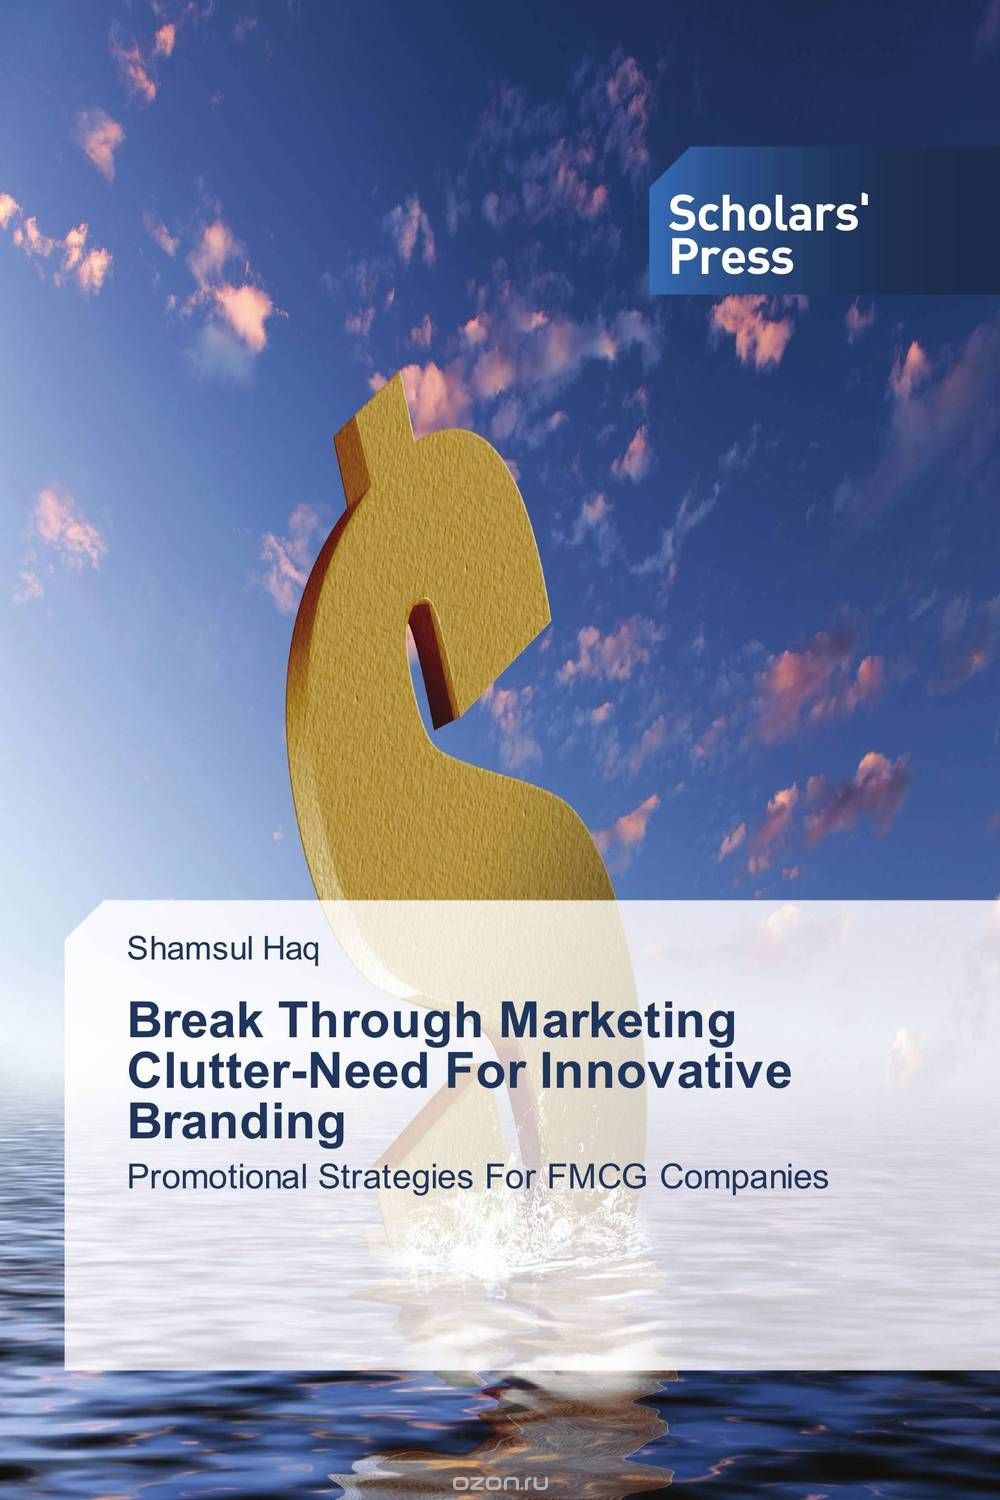 Скачать книгу "Break Through Marketing Clutter-Need For Innovative Branding"